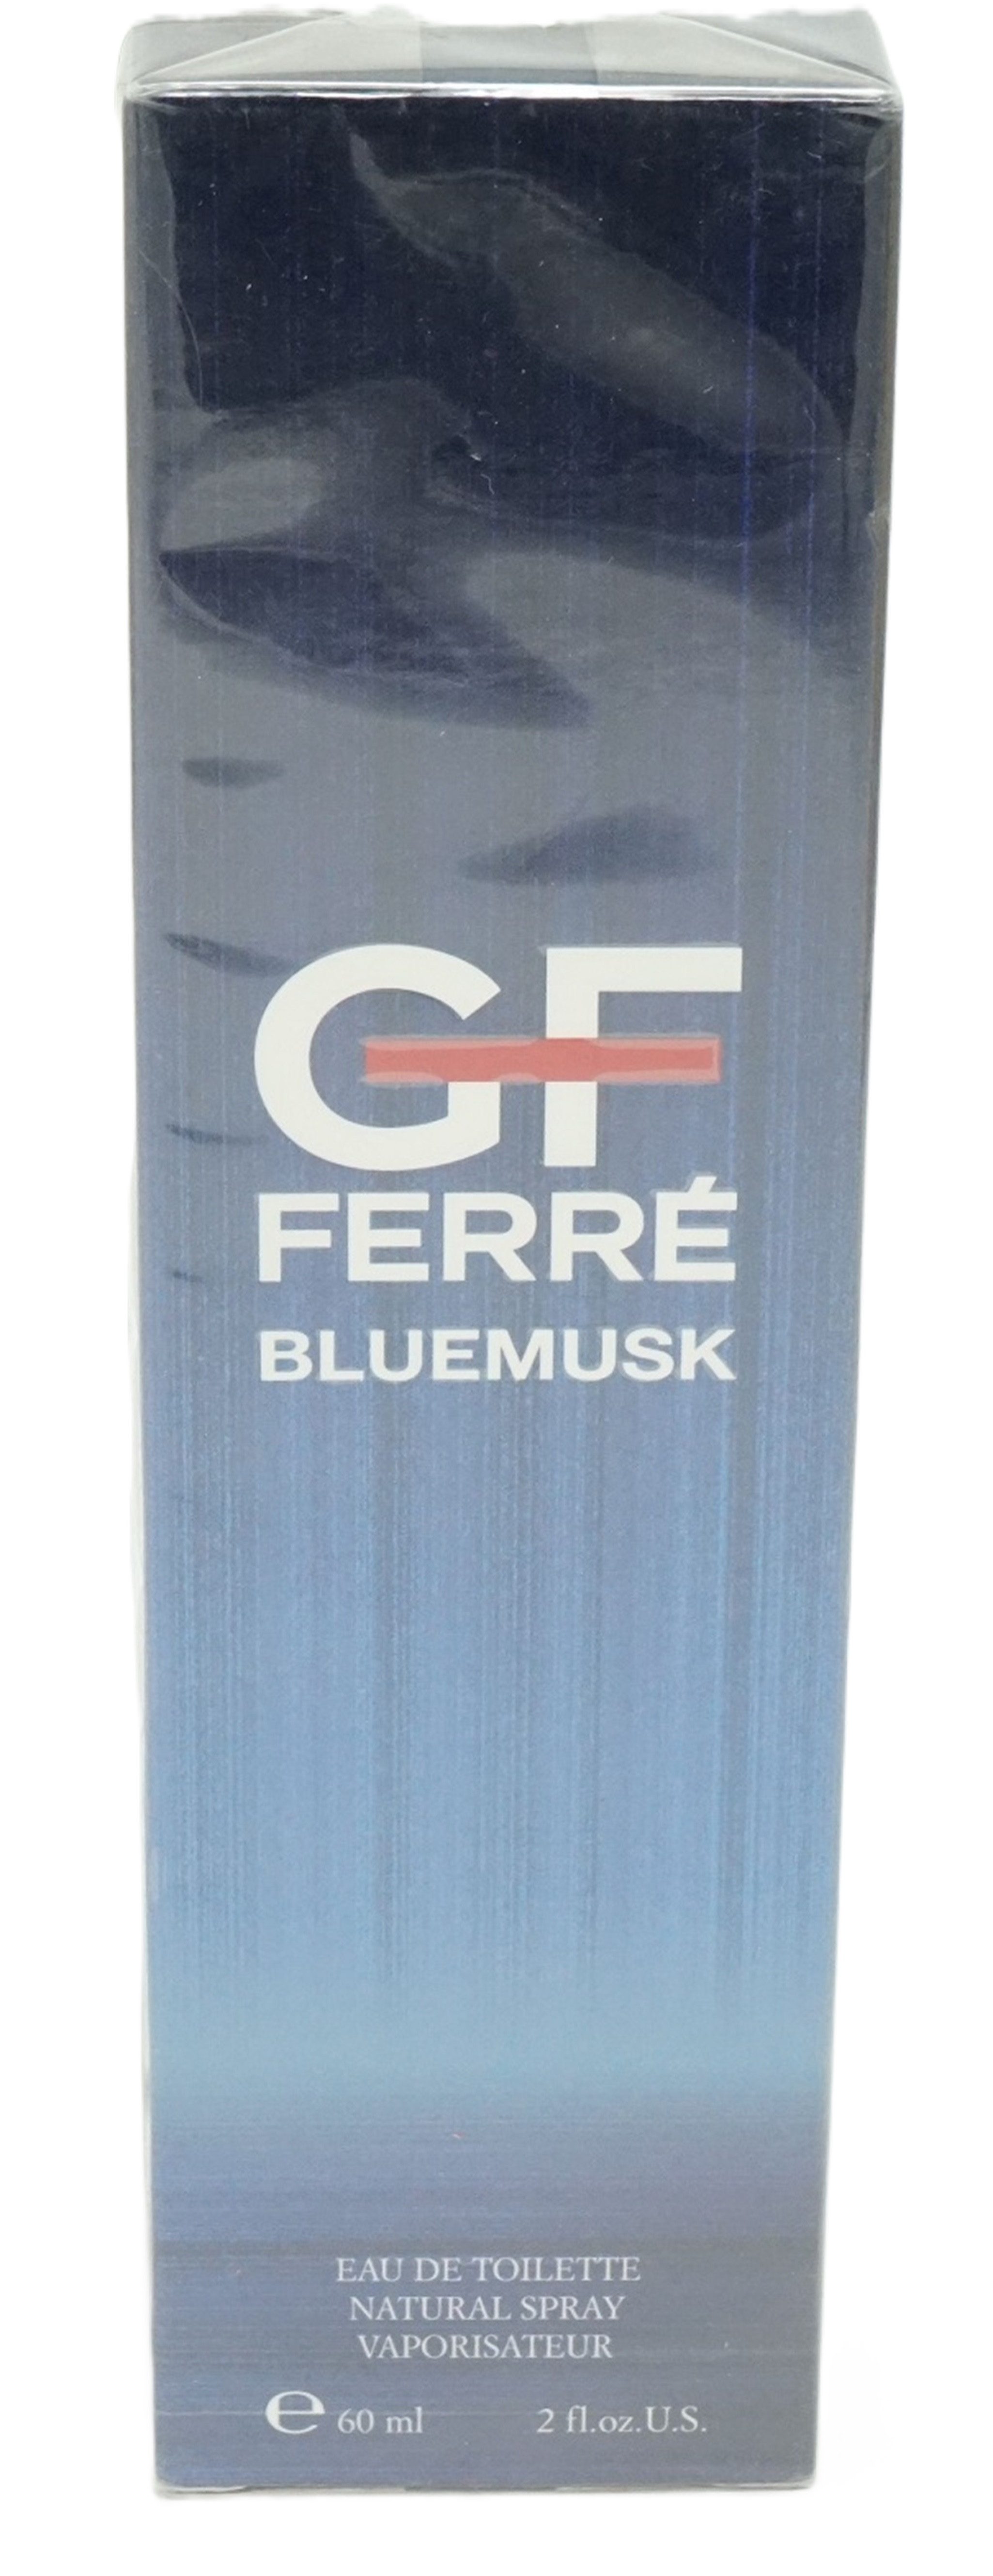 Gianfranco Ferré Eau de Toilette Gianfranco Ferre Bluemusk Eau de Toilette Spray 60 ml